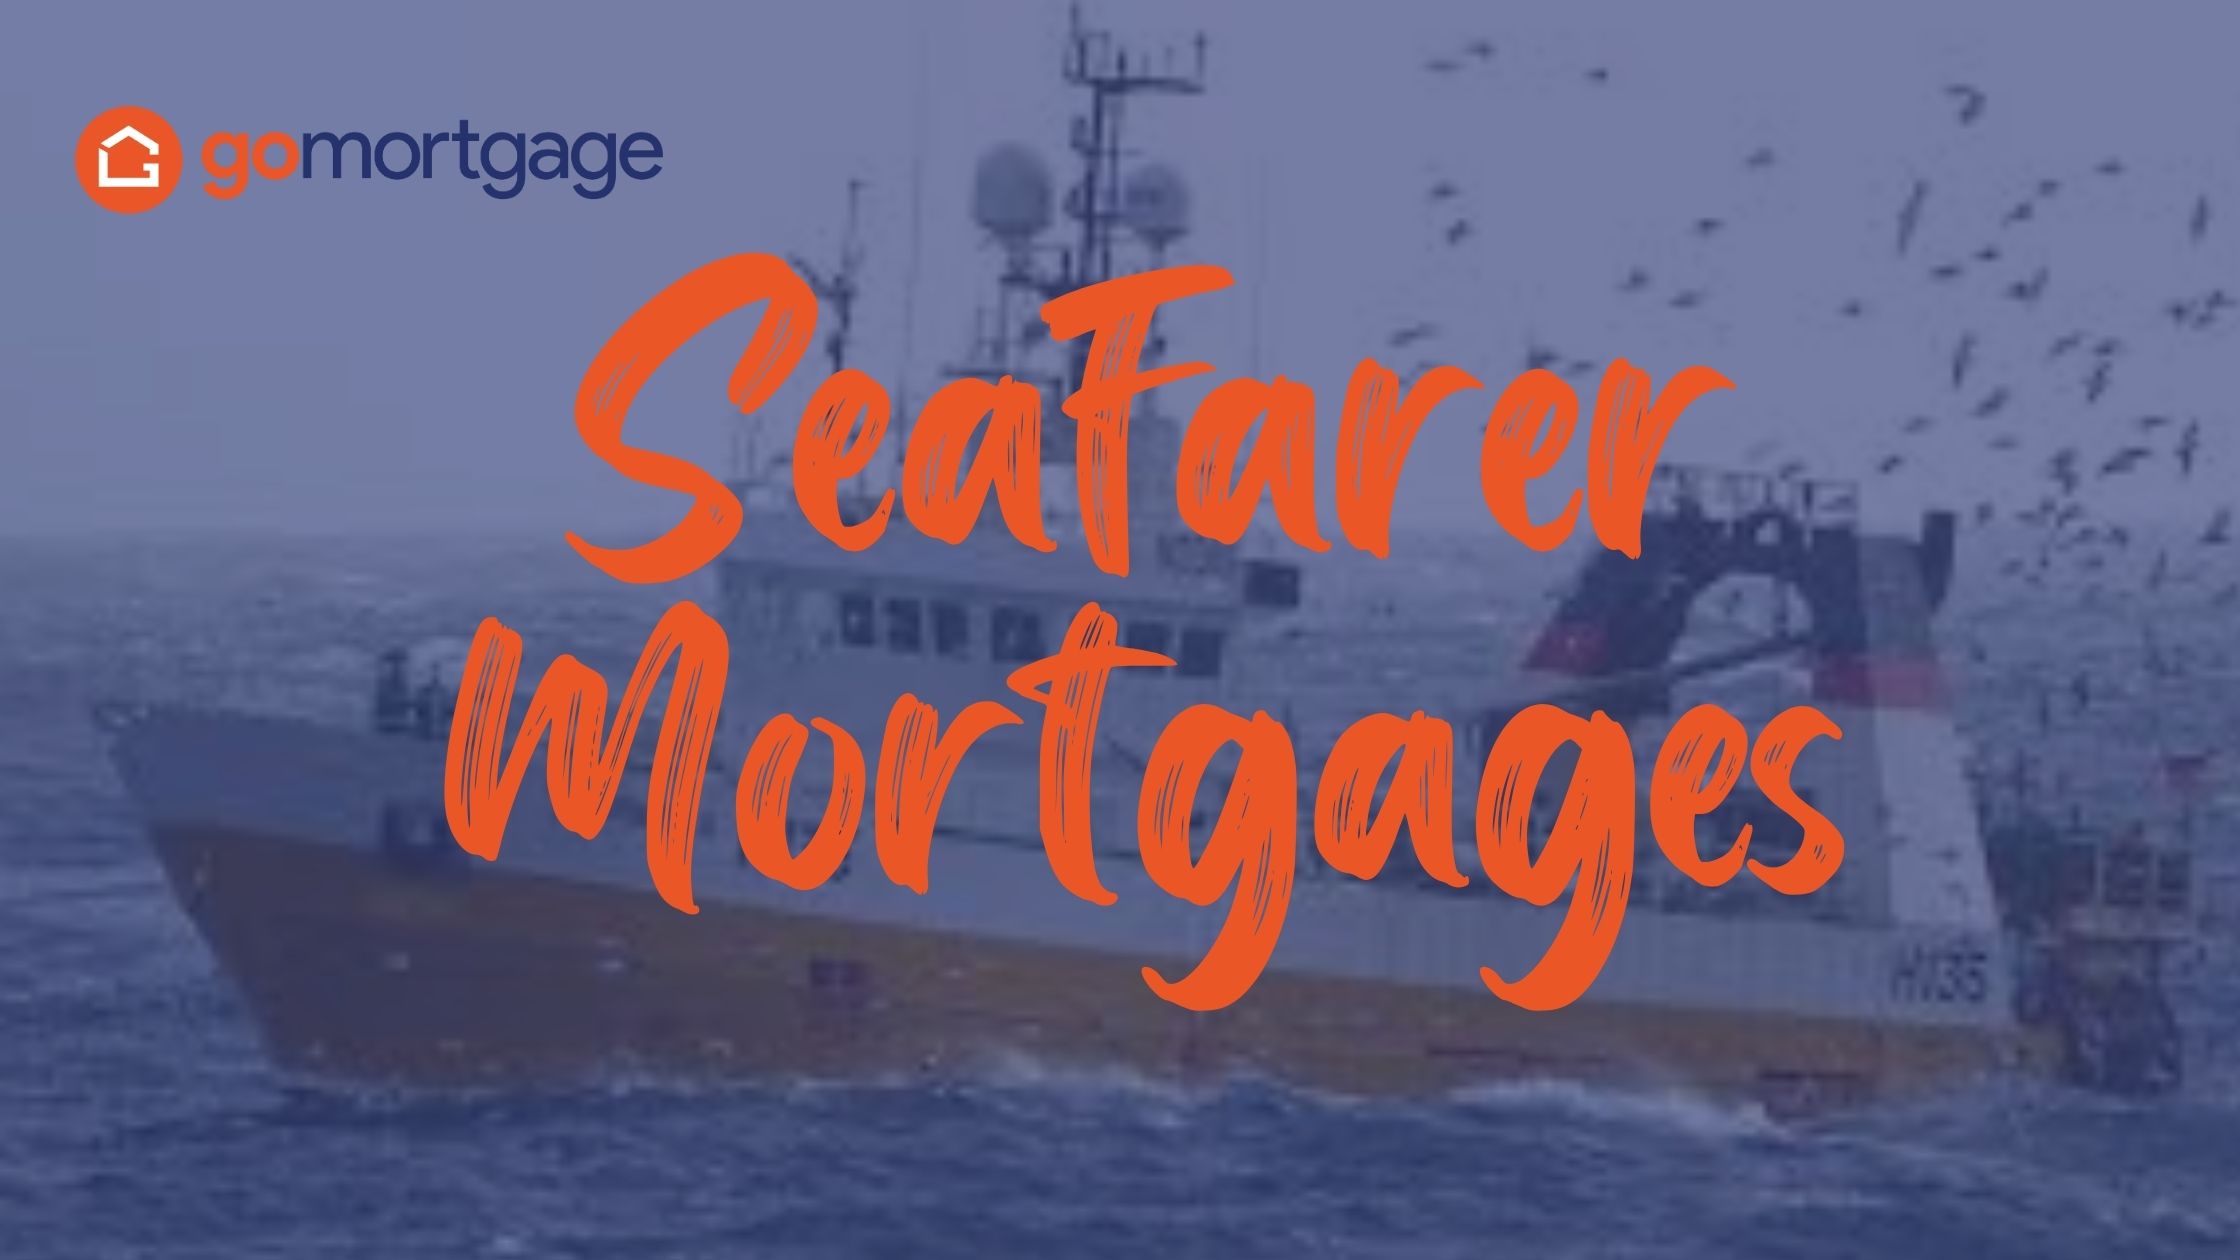 Seafarer Mortgages